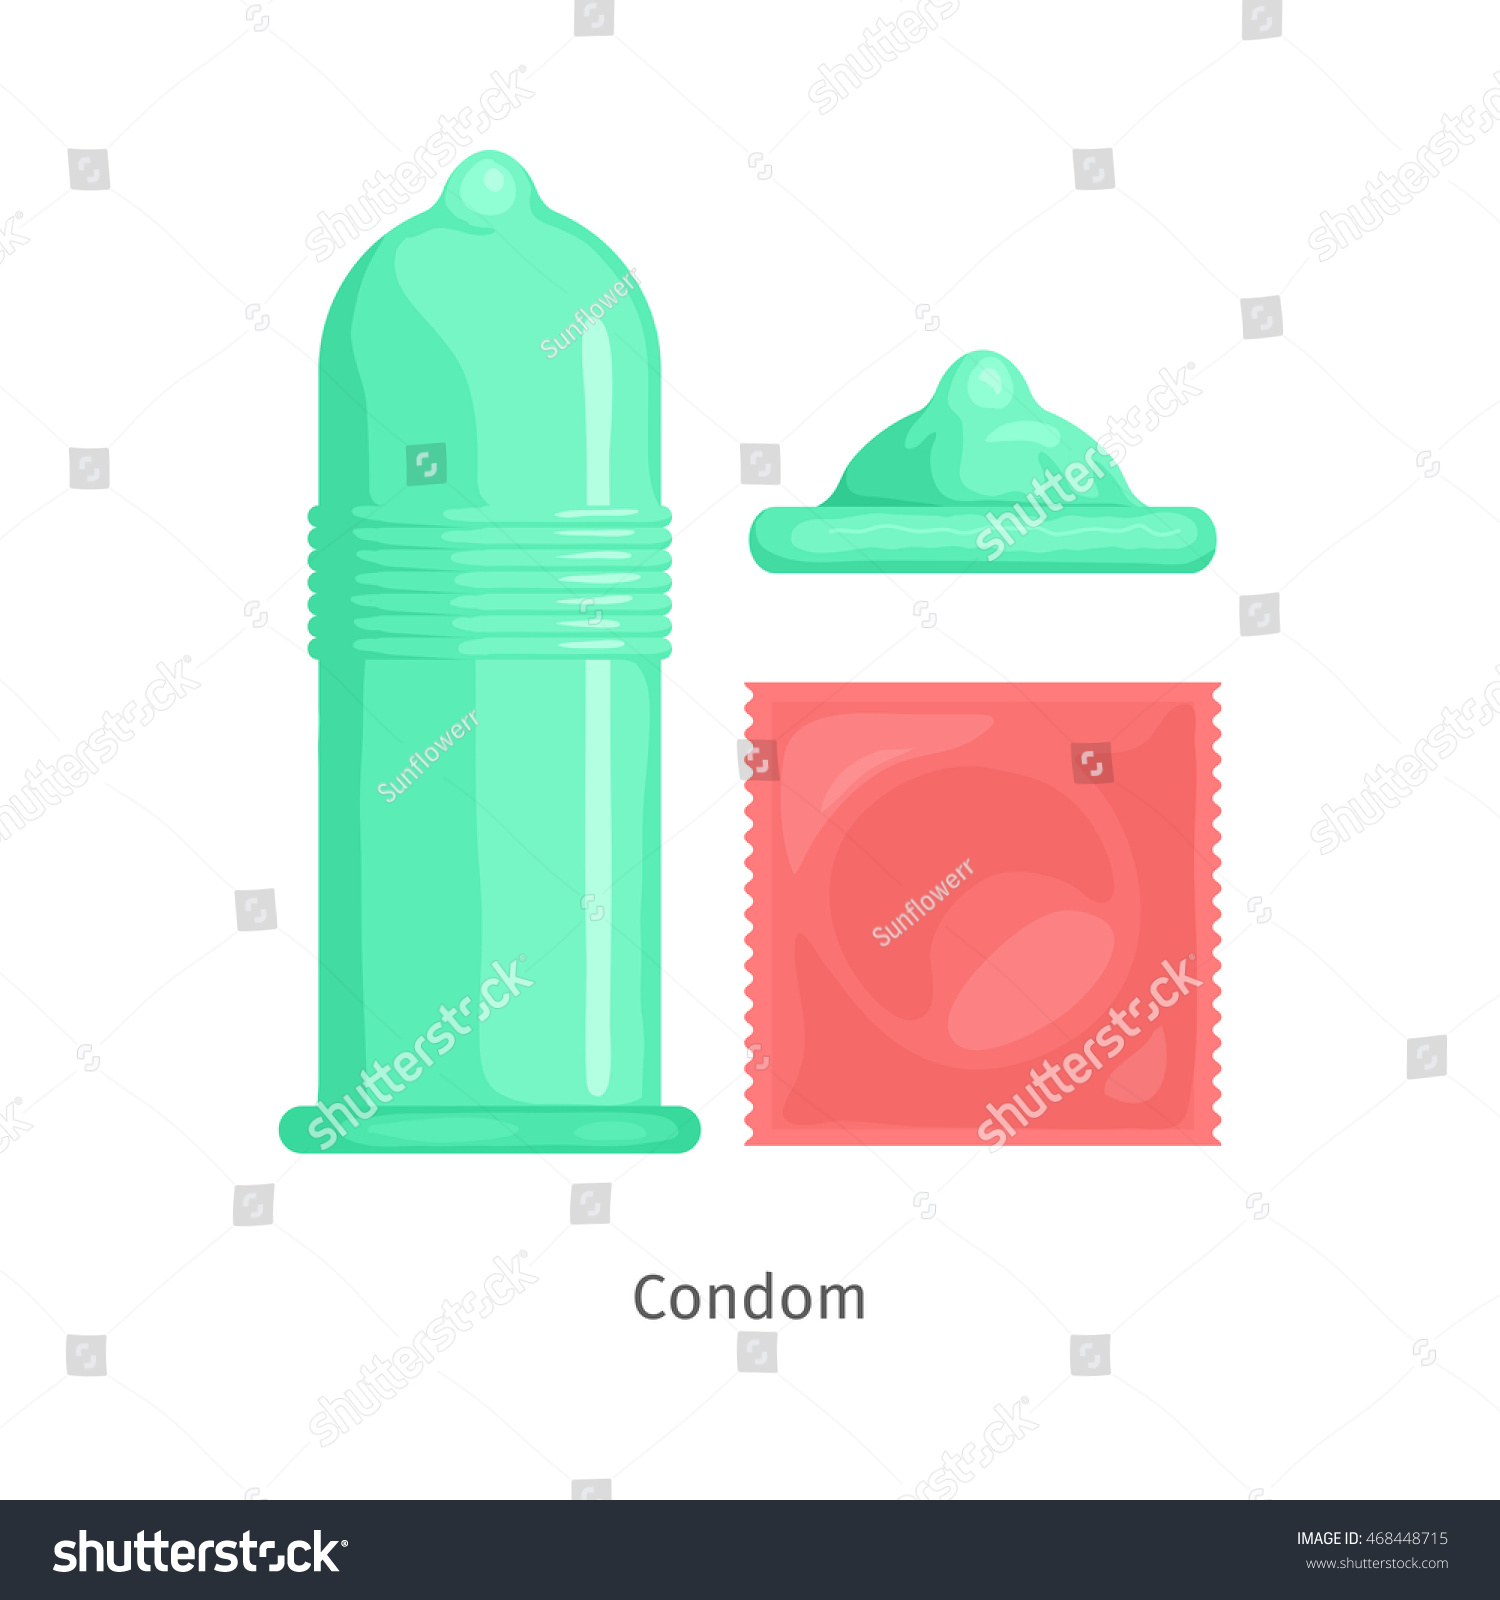 Contraception Method Condom Contraceptive Icons Set Stock Vector Royalty Free 468448715 6940